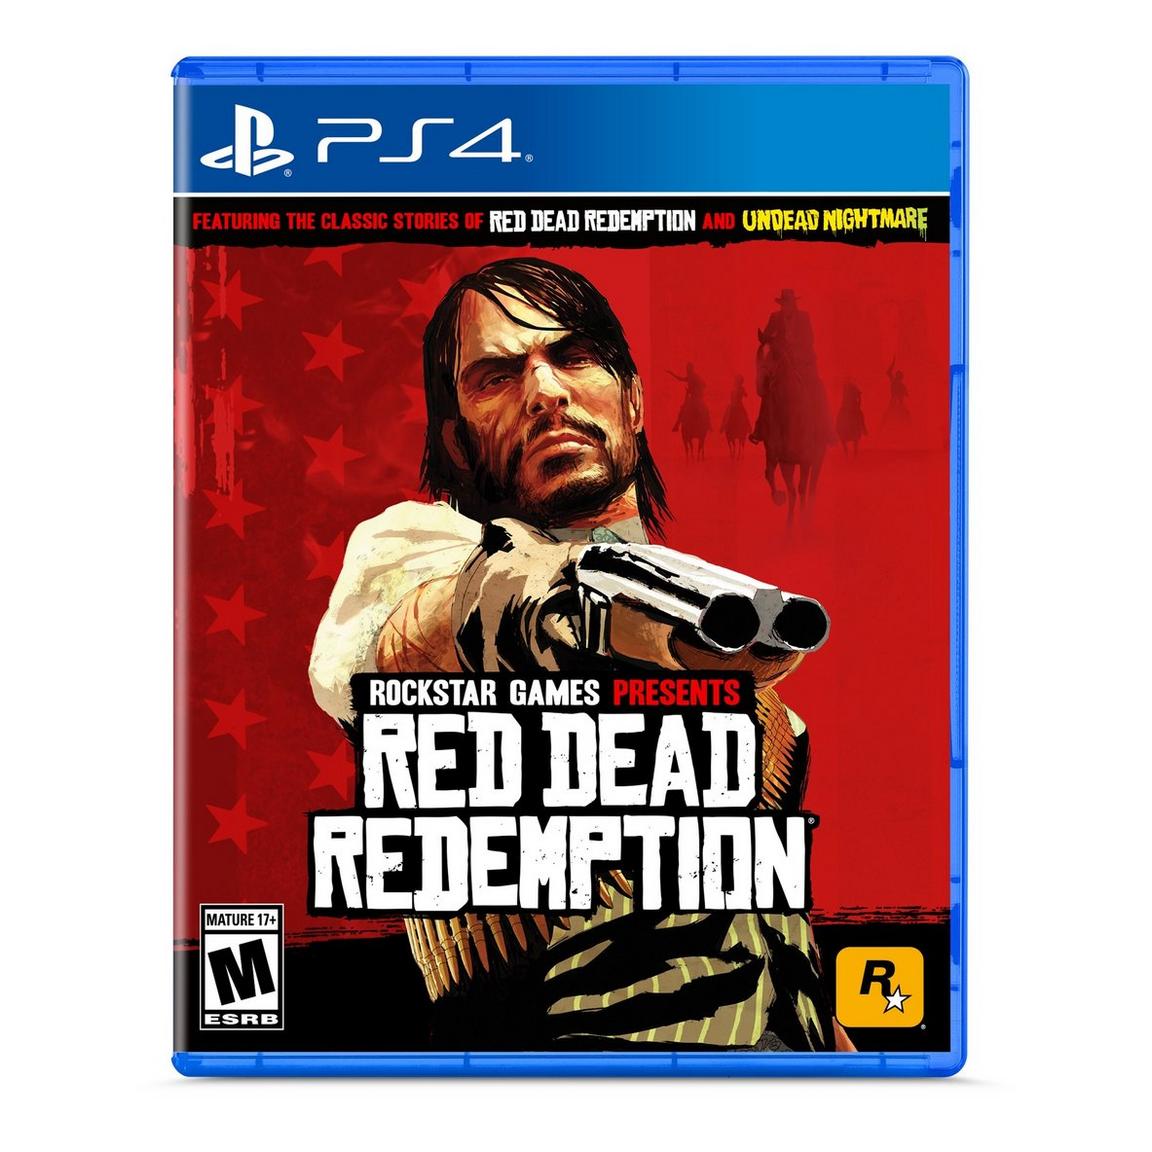 Видеоигра Red Dead Redemption (with Undead Nightmare DLC) - PlayStation 4 картина по номерам набор для раскрашивания на холсте игра rdr red dead redemption 6570 в 60x40